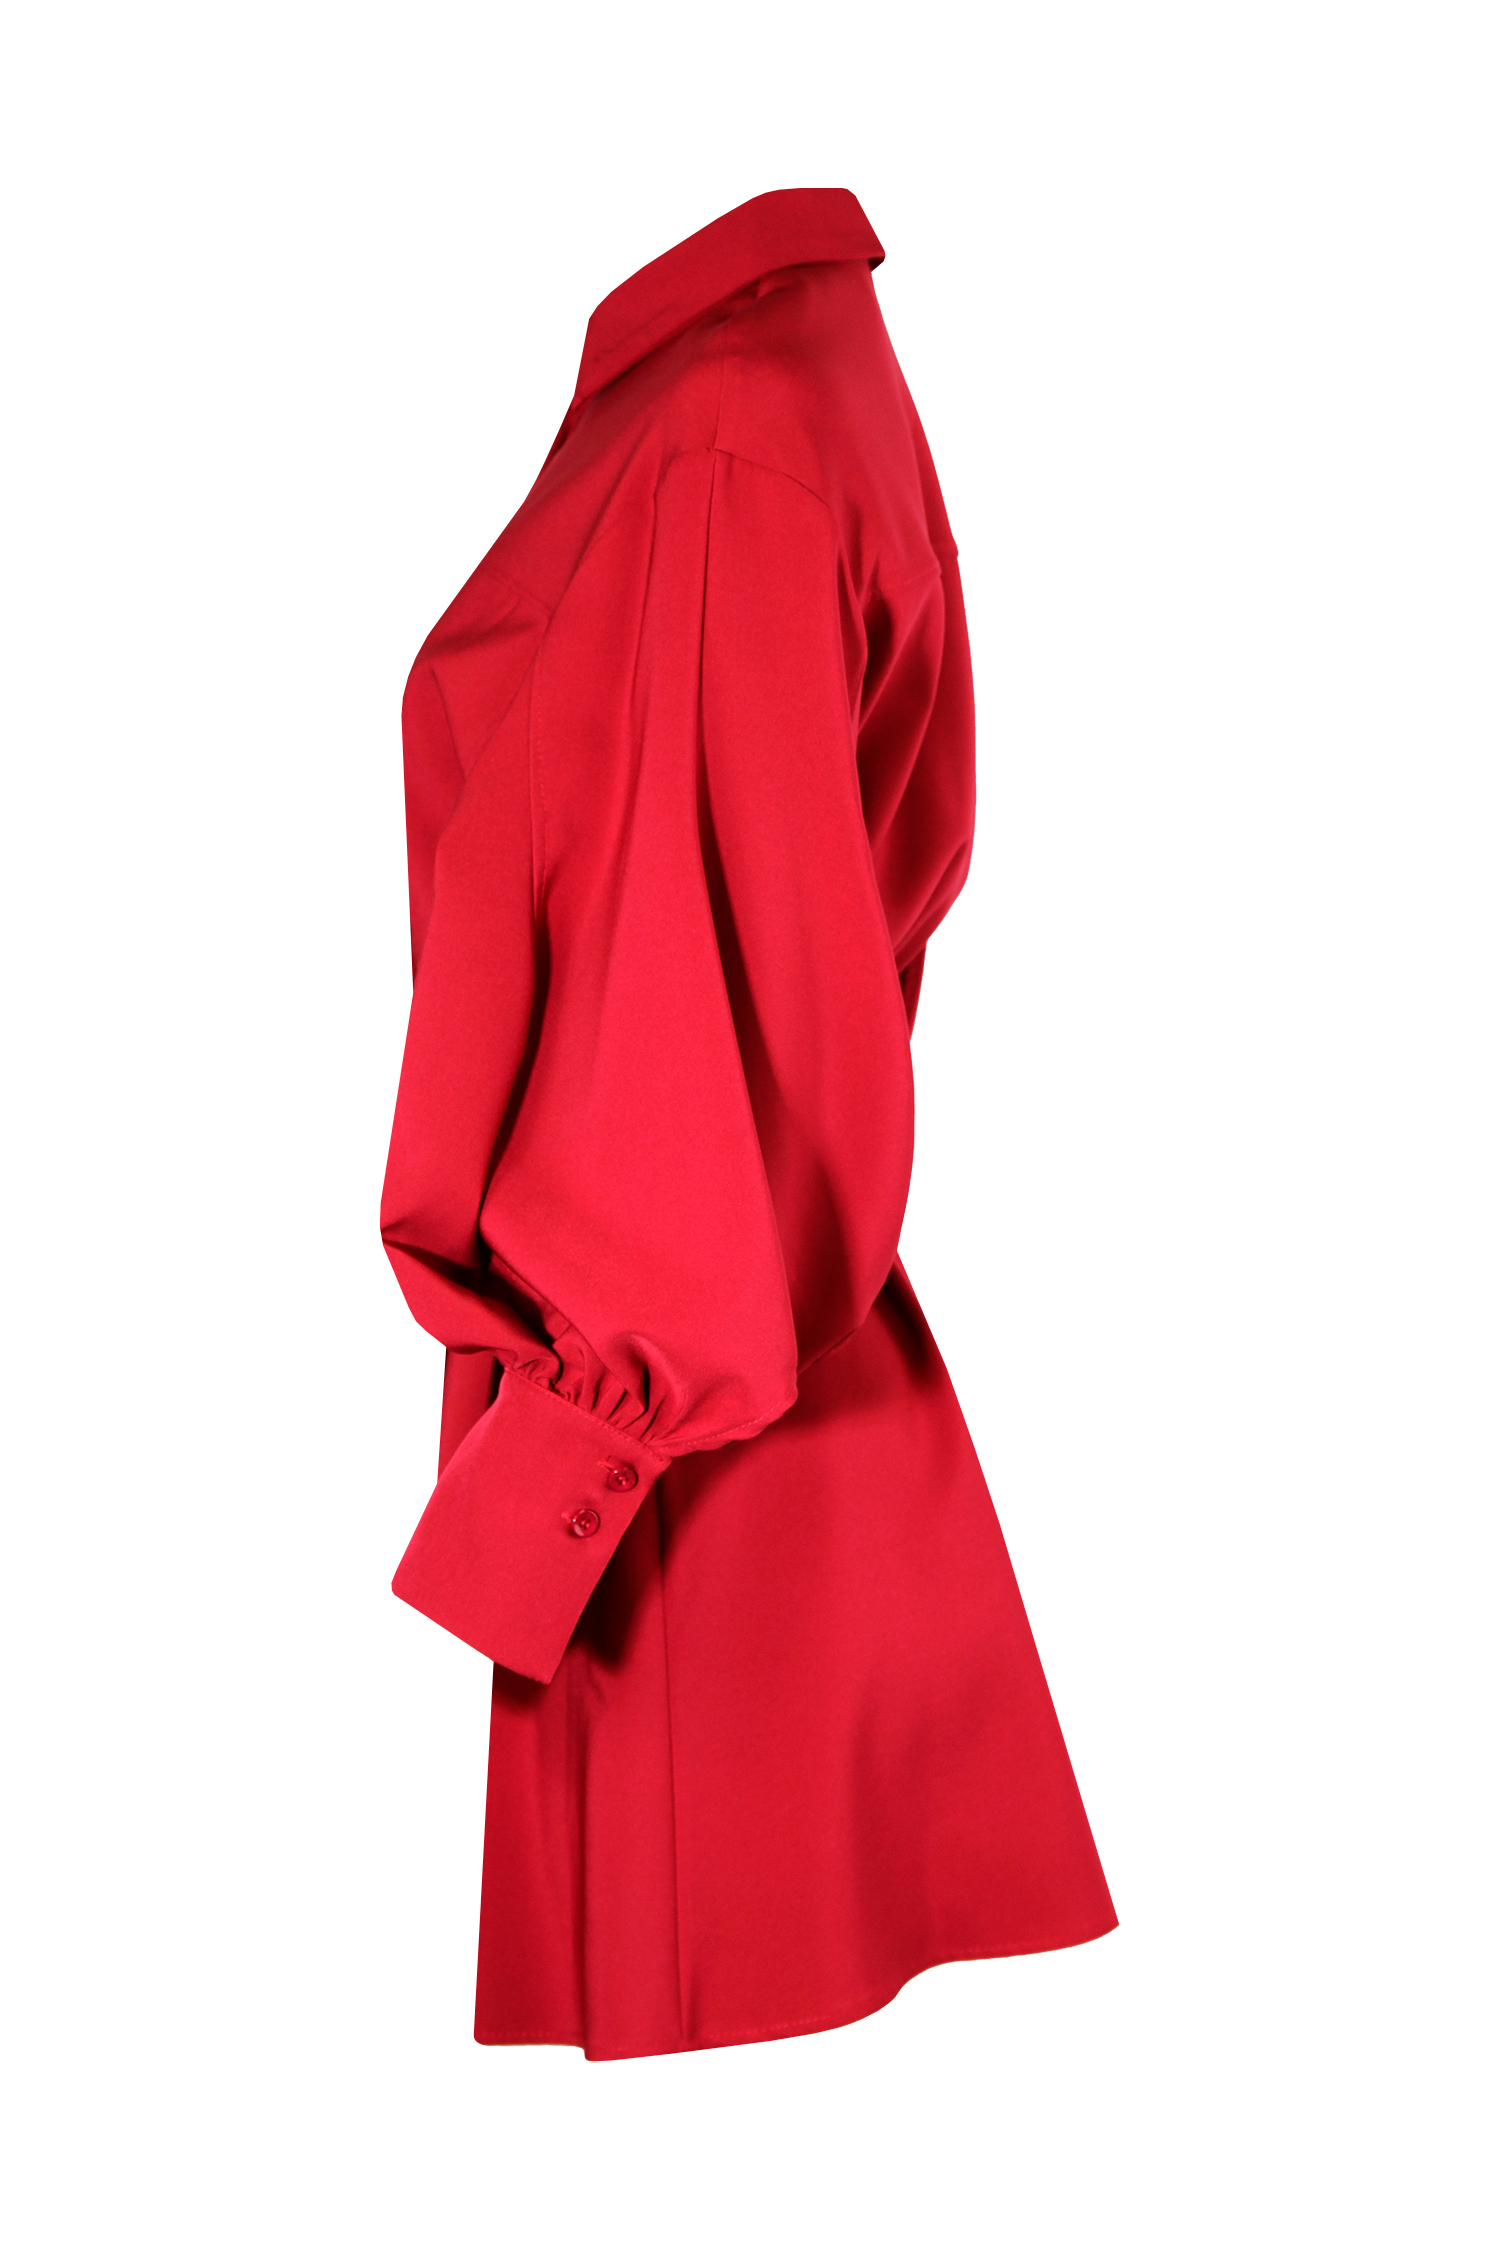 vestido-vermelho-2